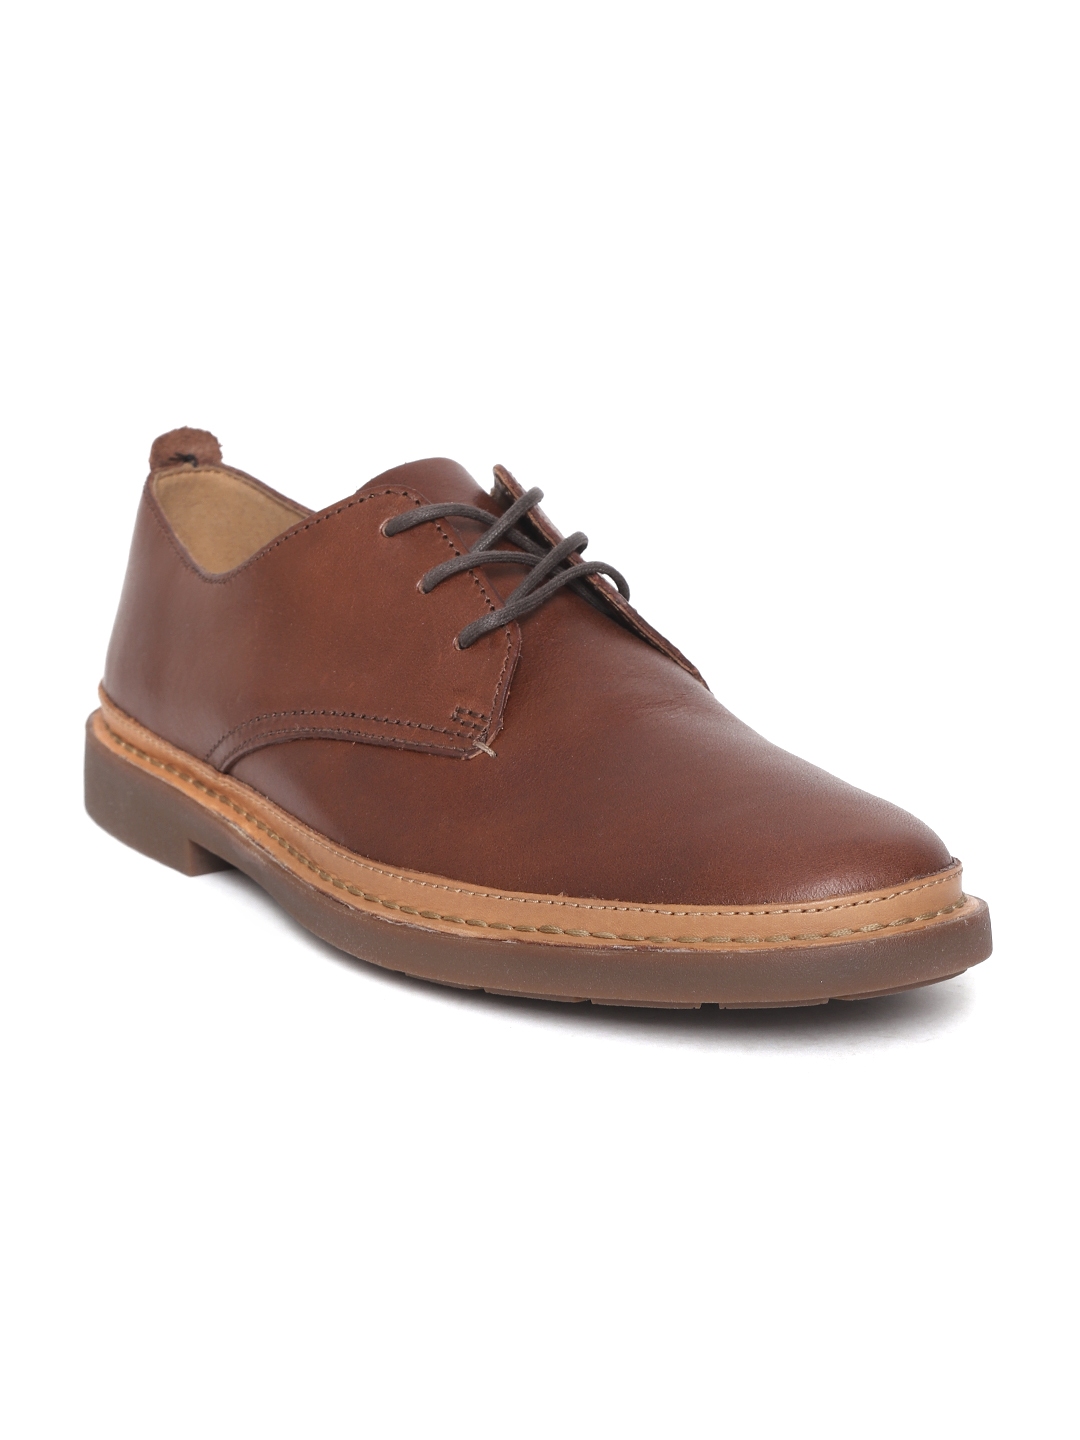 Buy Clarks Men Brown Solid Leather Derbys Casual Shoes for Men